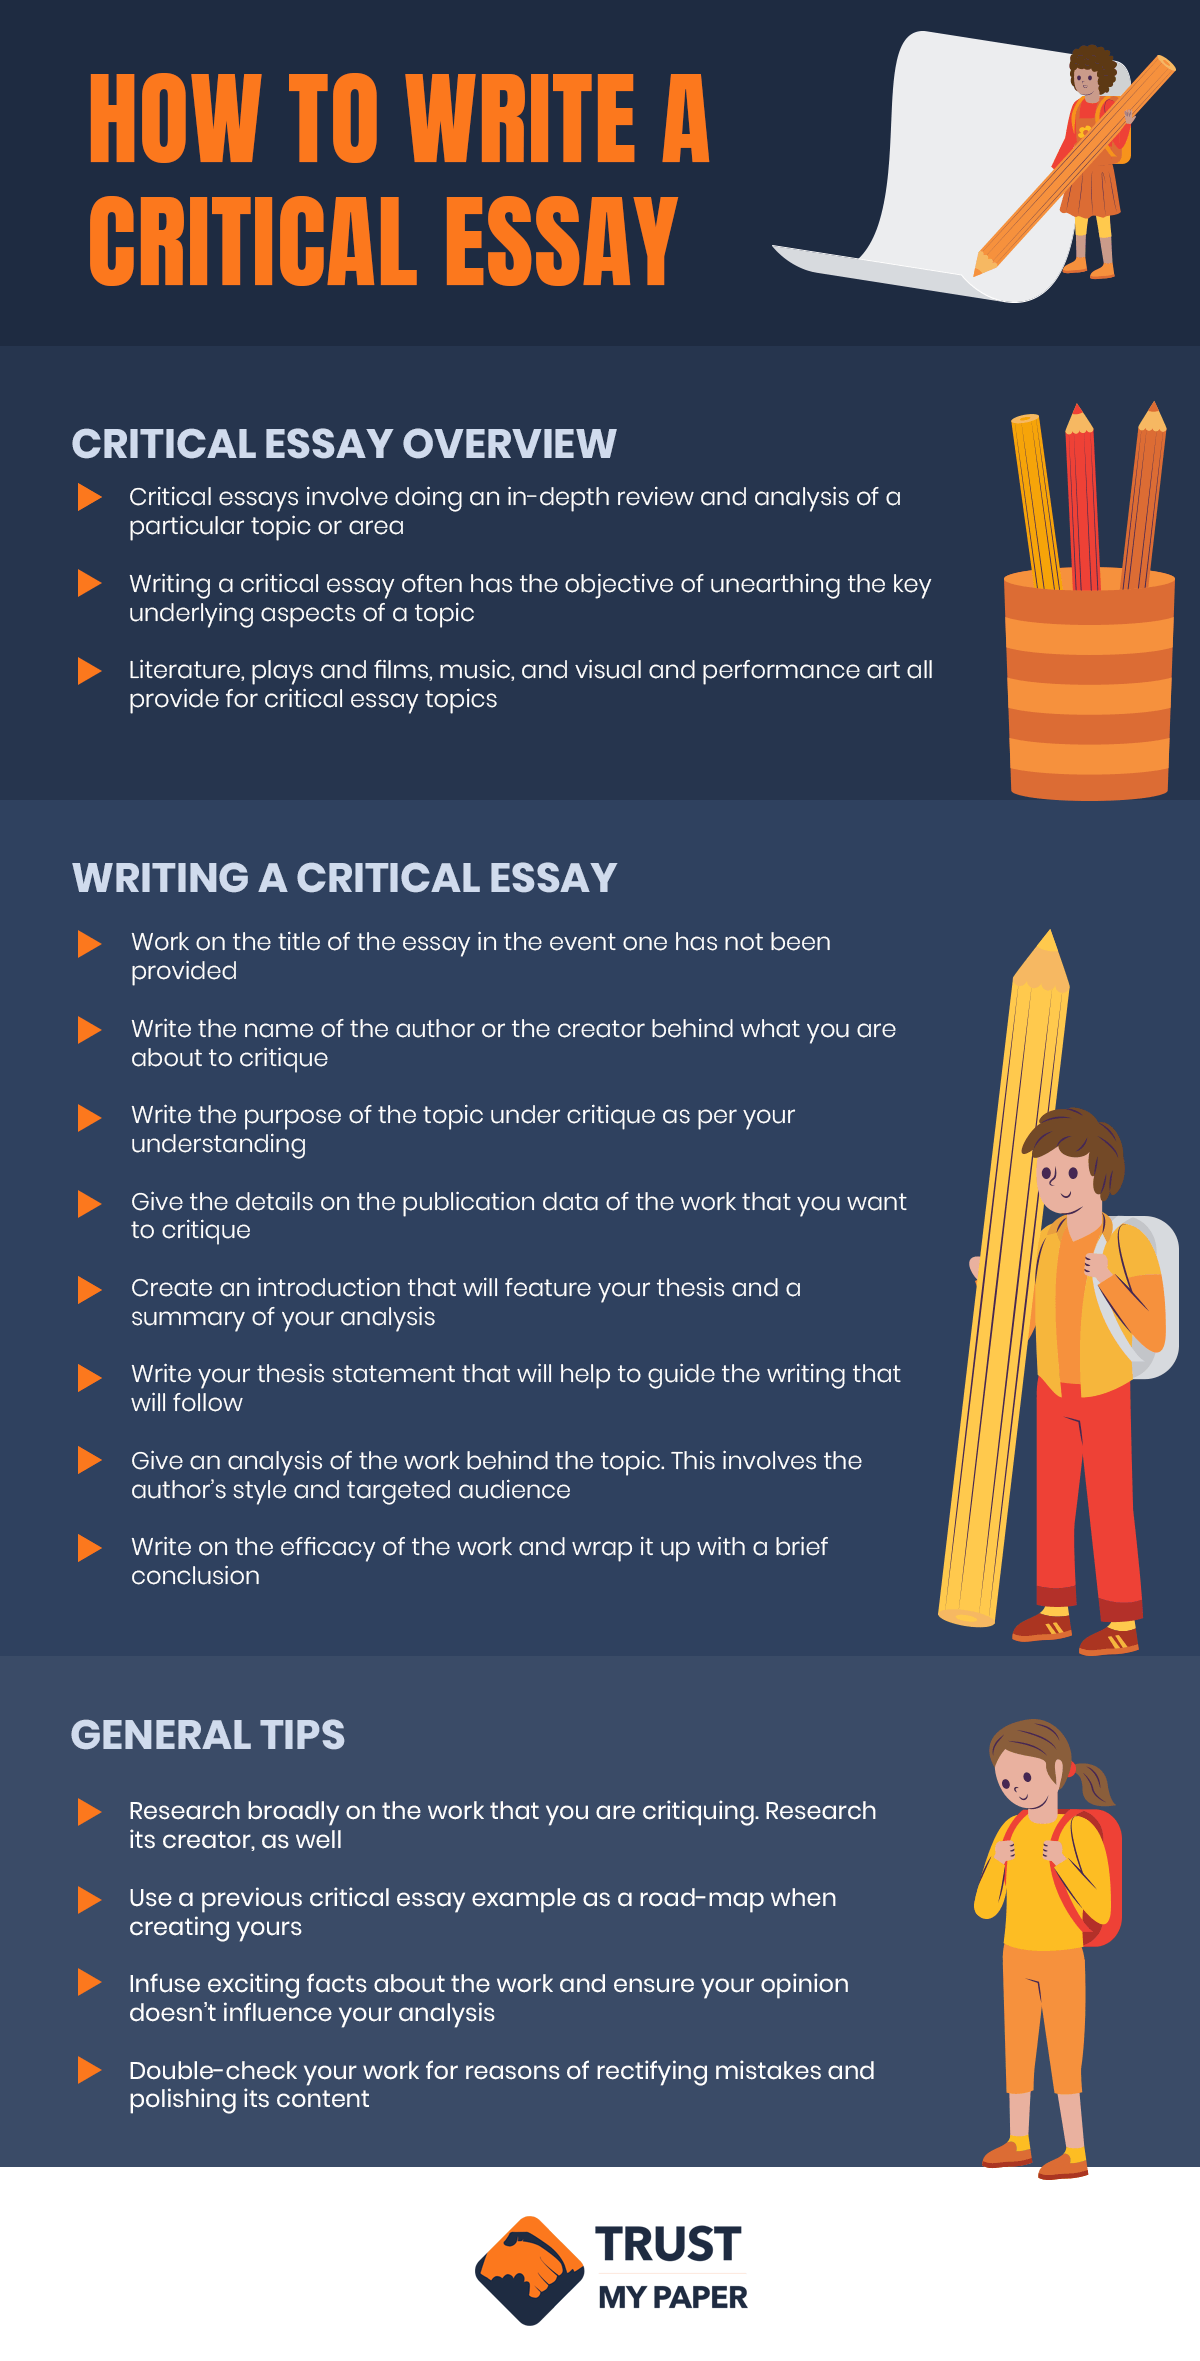 how to write critical analysis essay